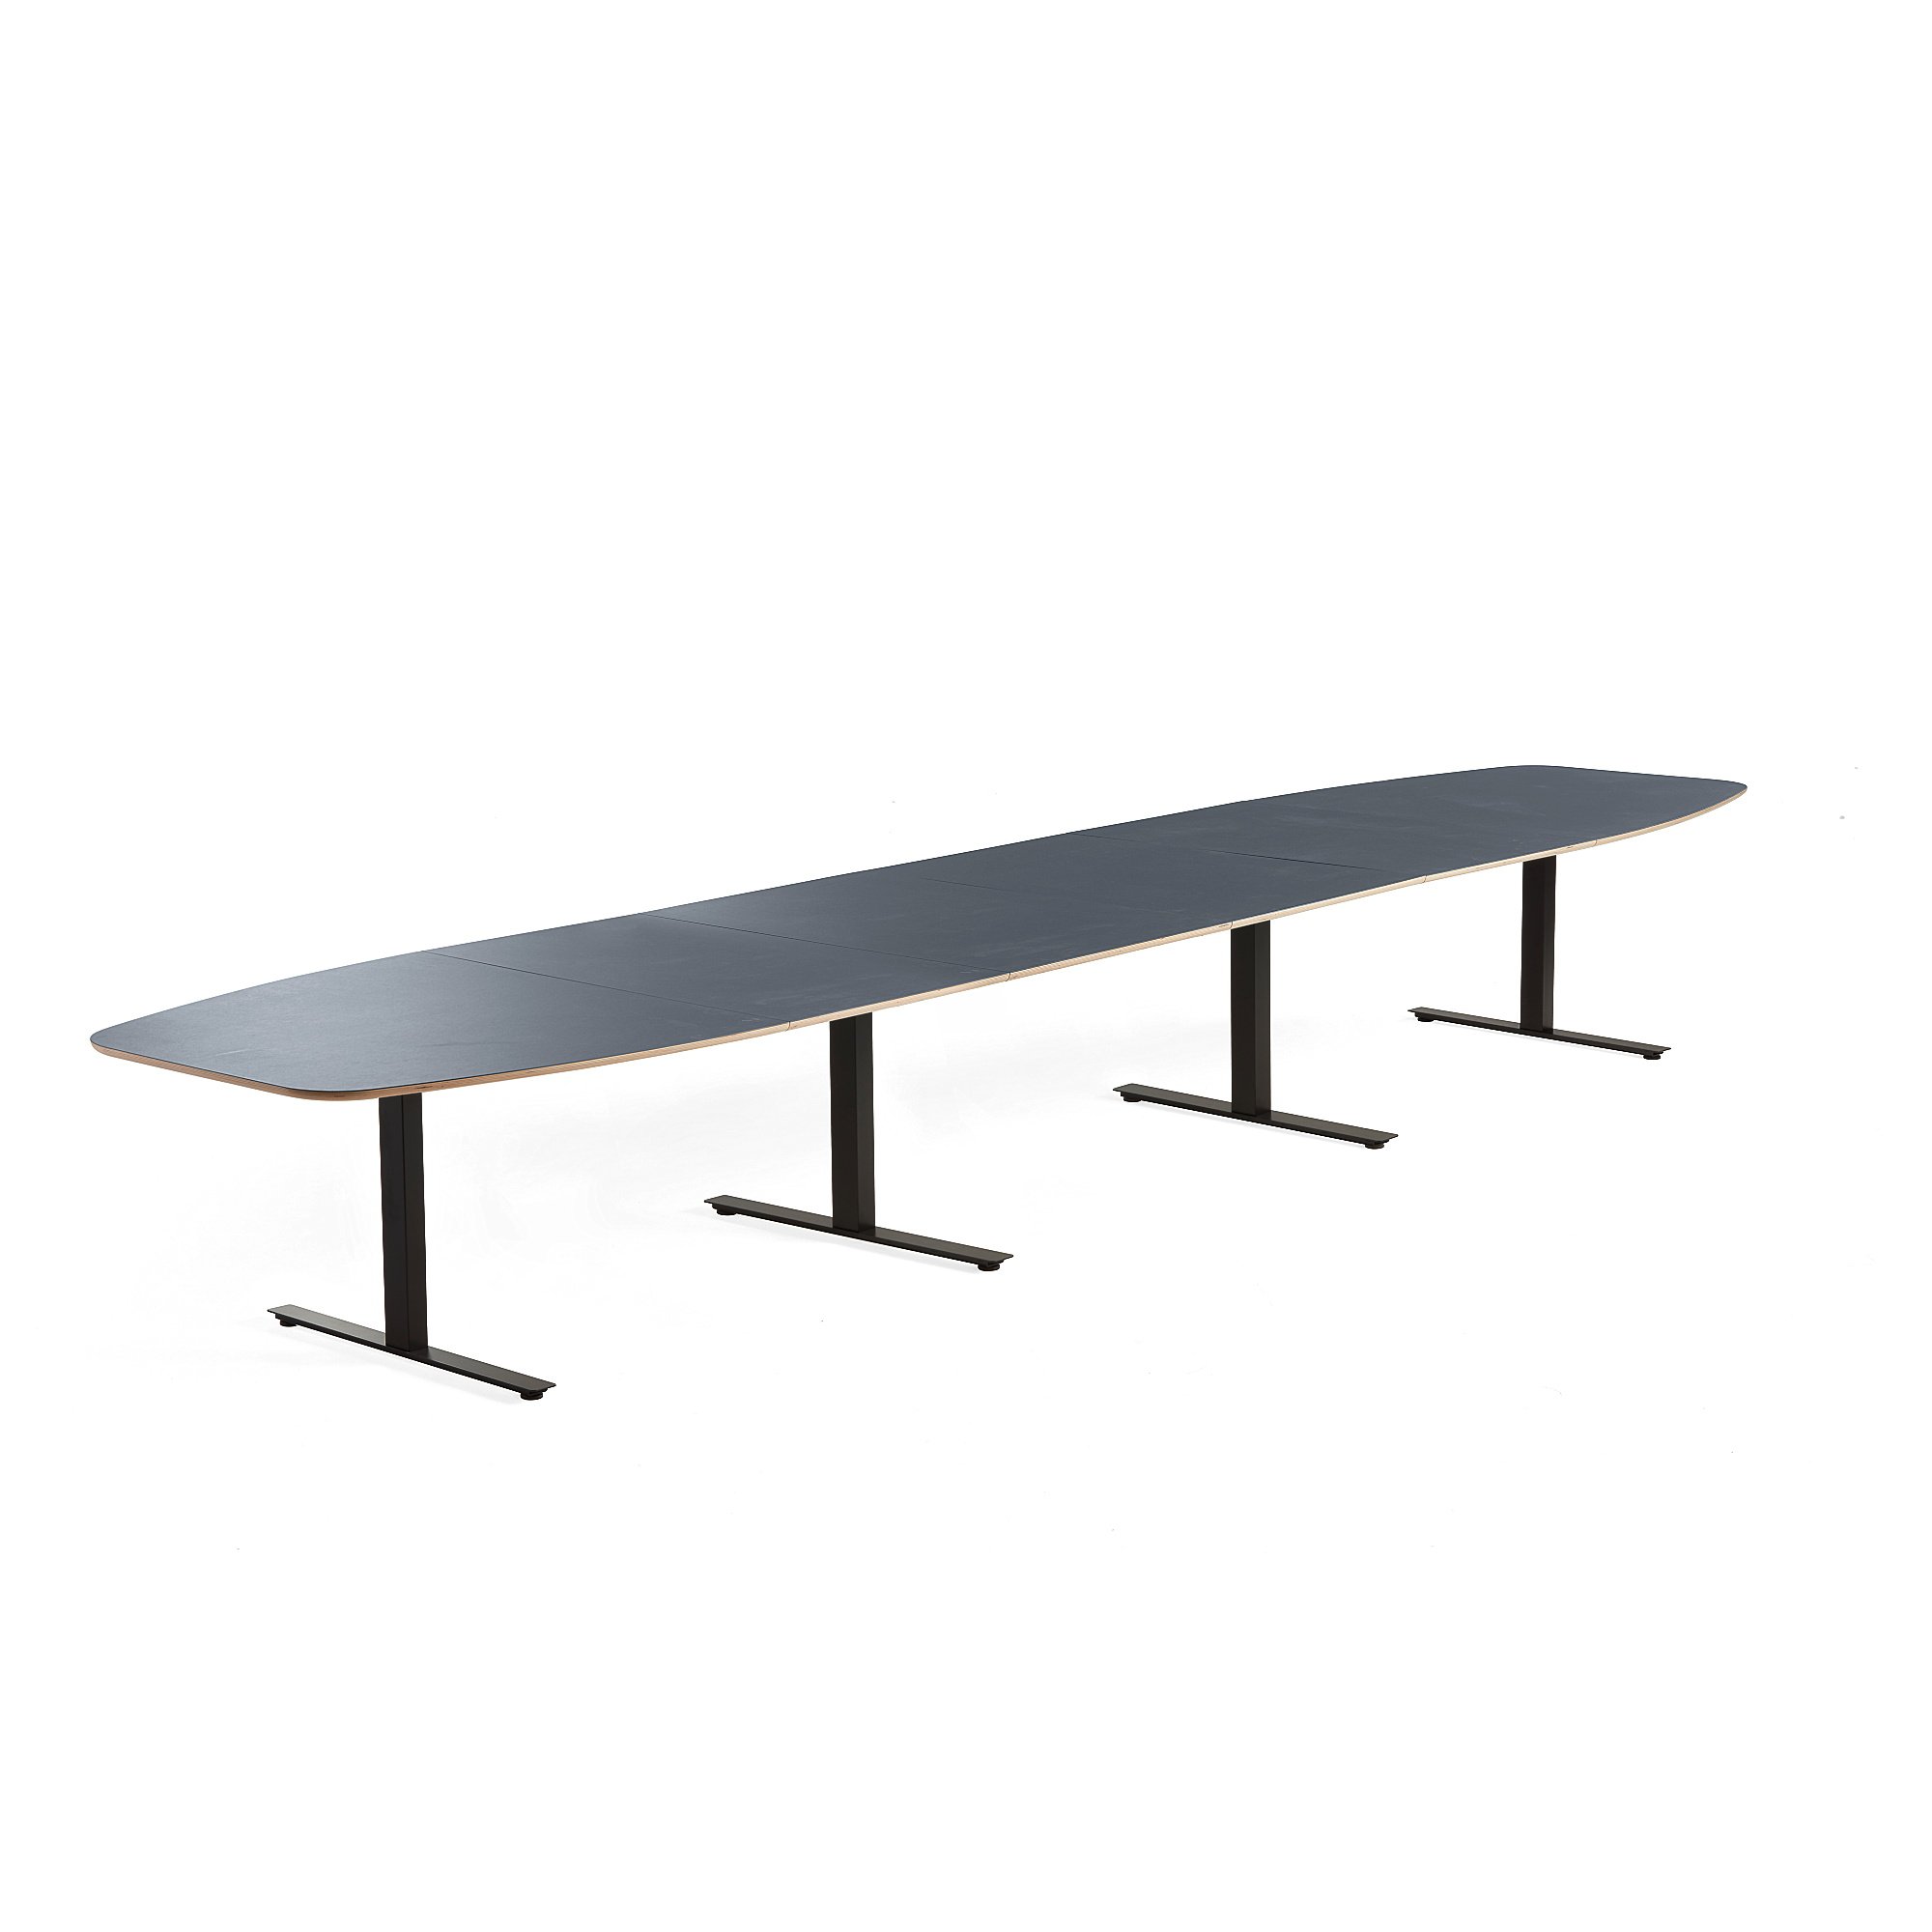 Rokovací stôl AUDREY, 5600x1200 mm, čierny rám, pastelová modrá doska